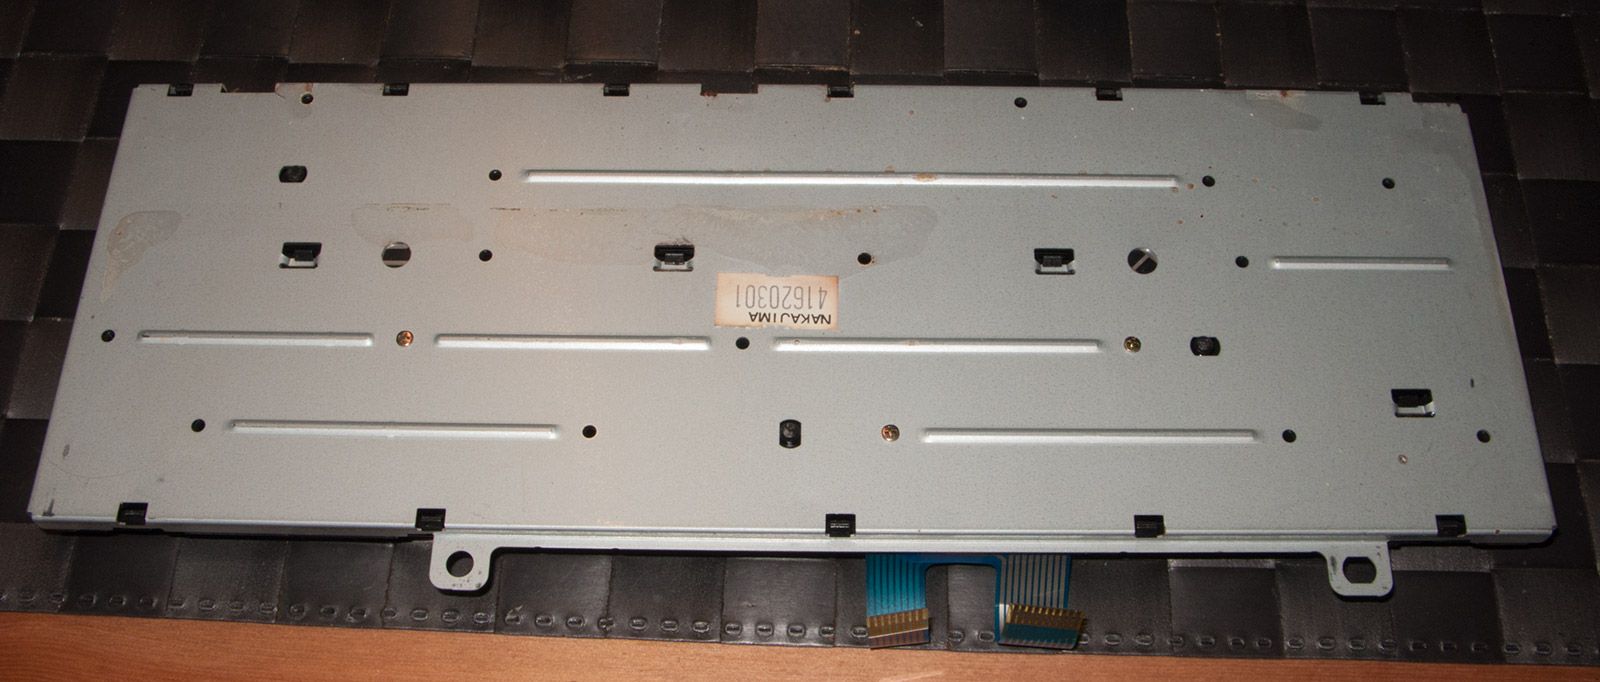 removing crews to go at the Amstrad Notepad NC200 keyboard